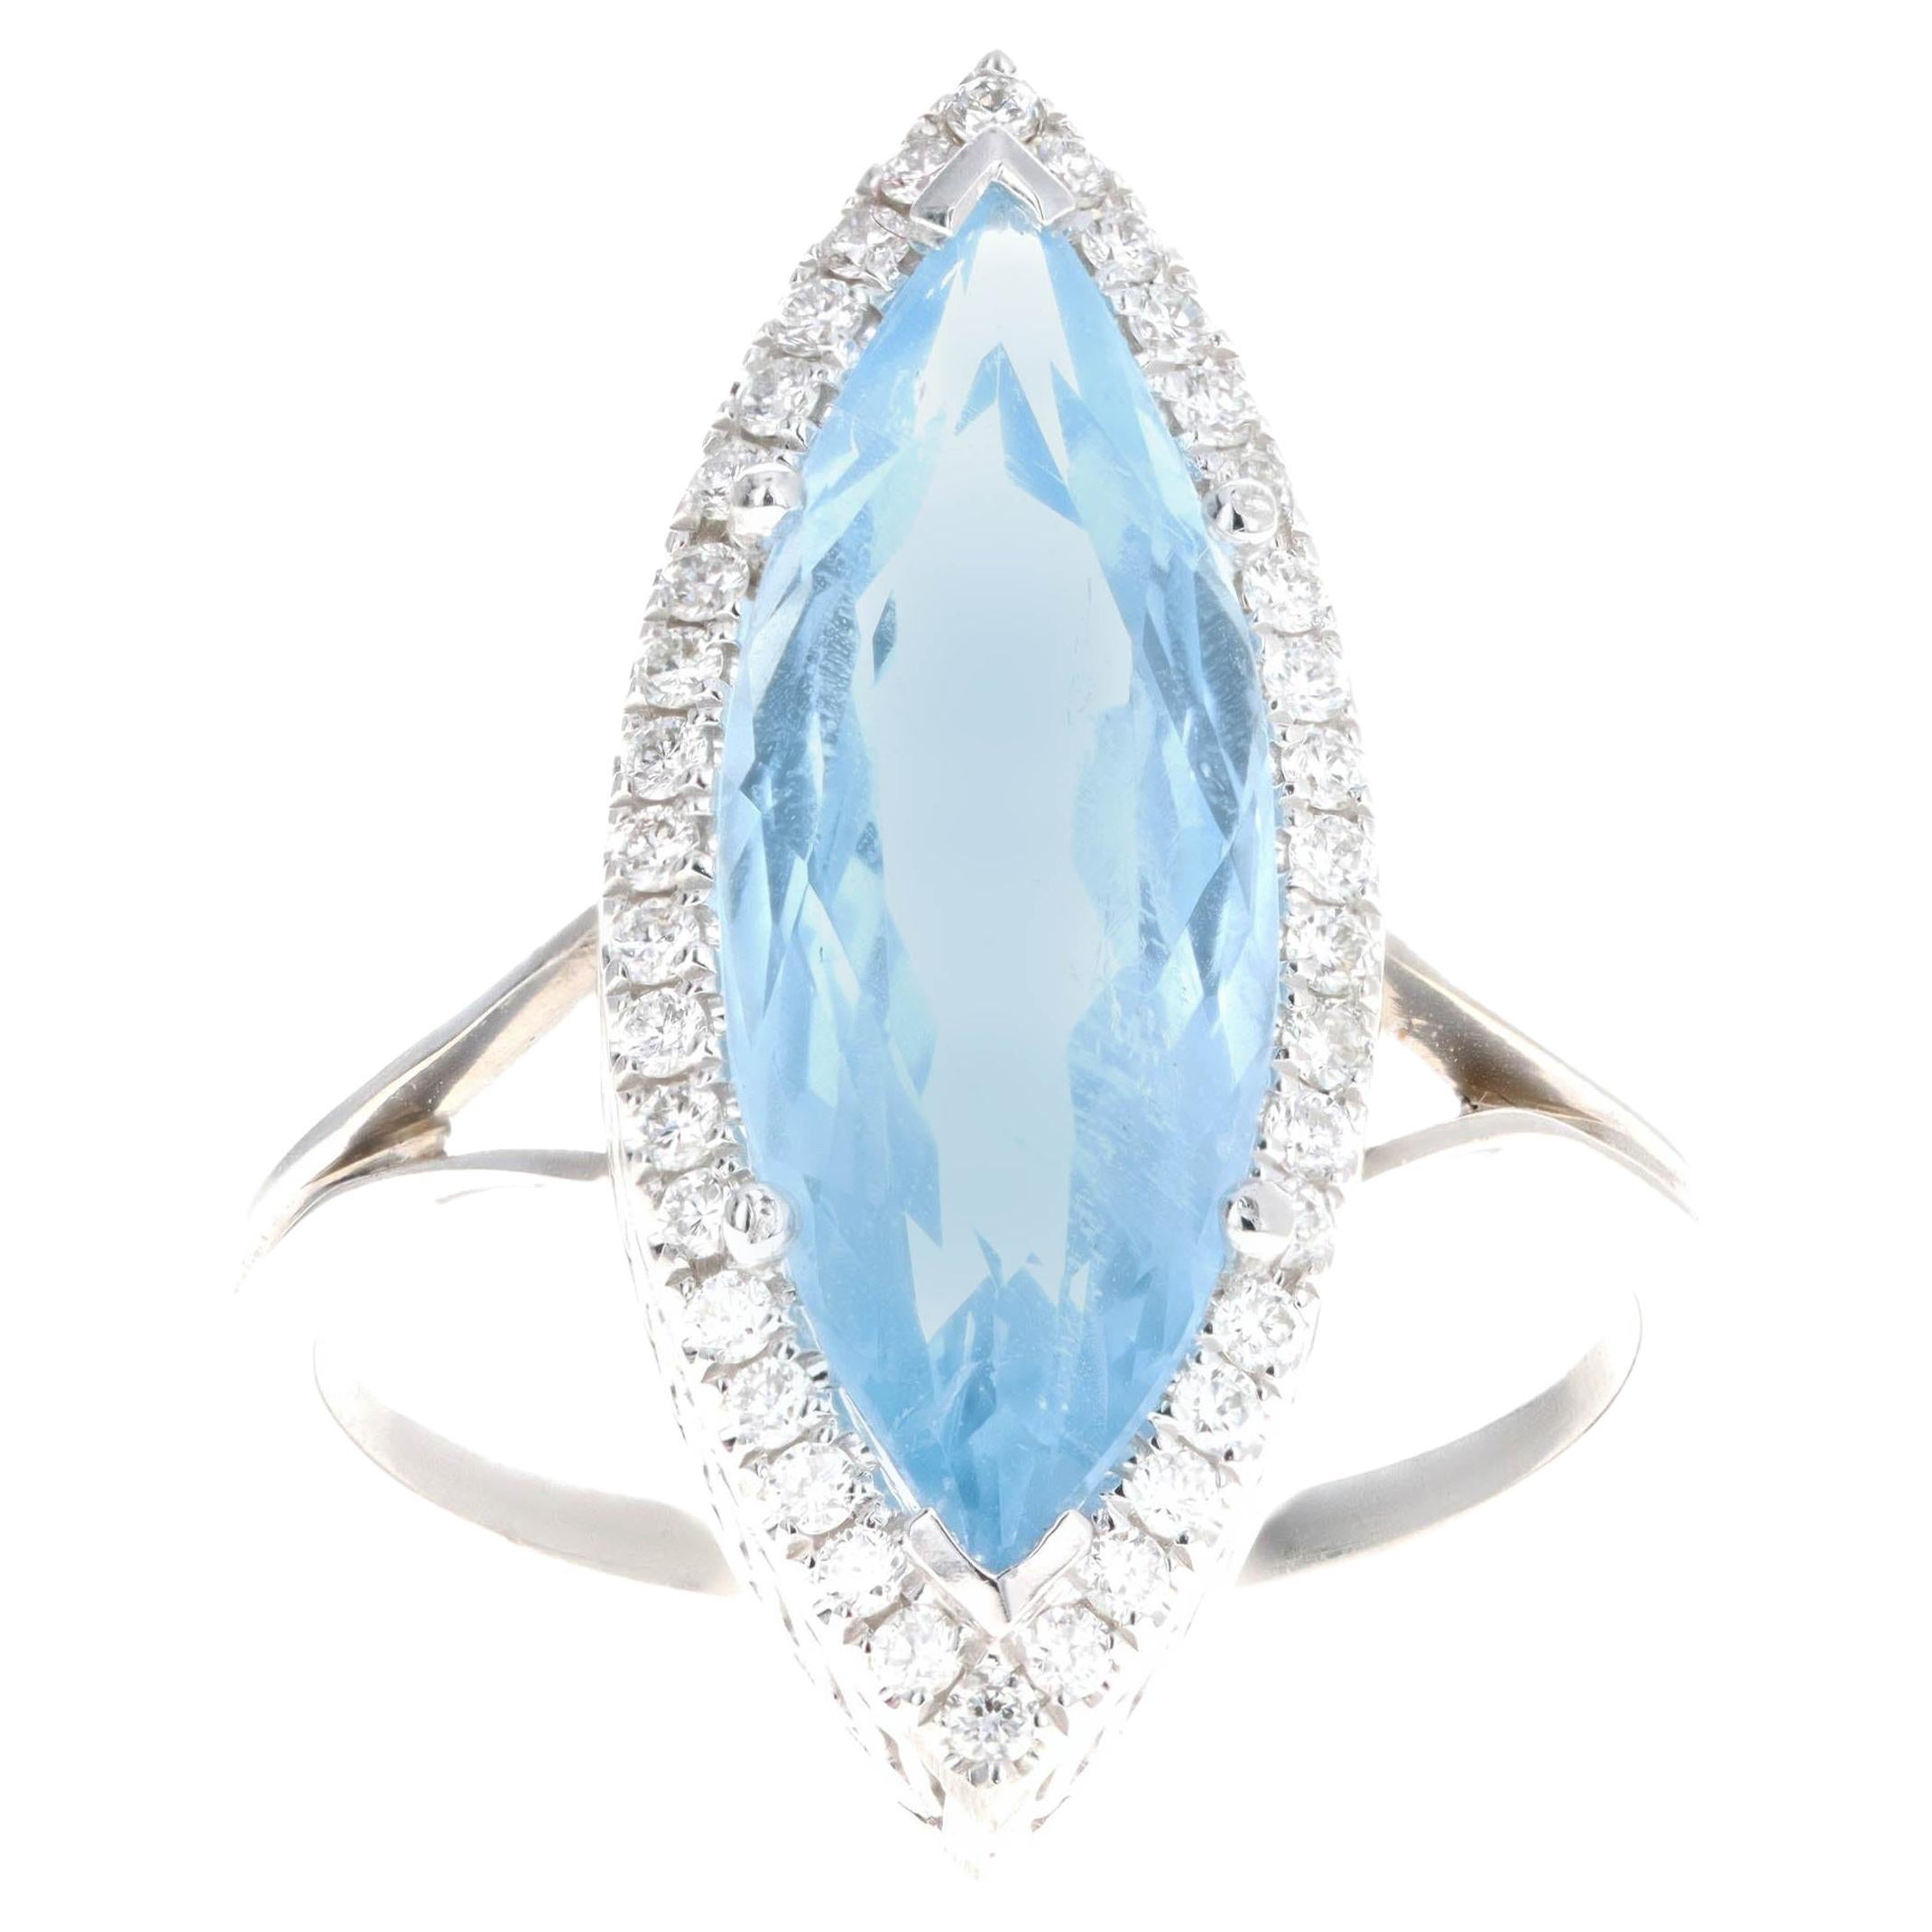 14K White Gold 4.47 Carat Marquise Cut Aquamarine & Diamond Halo Ring